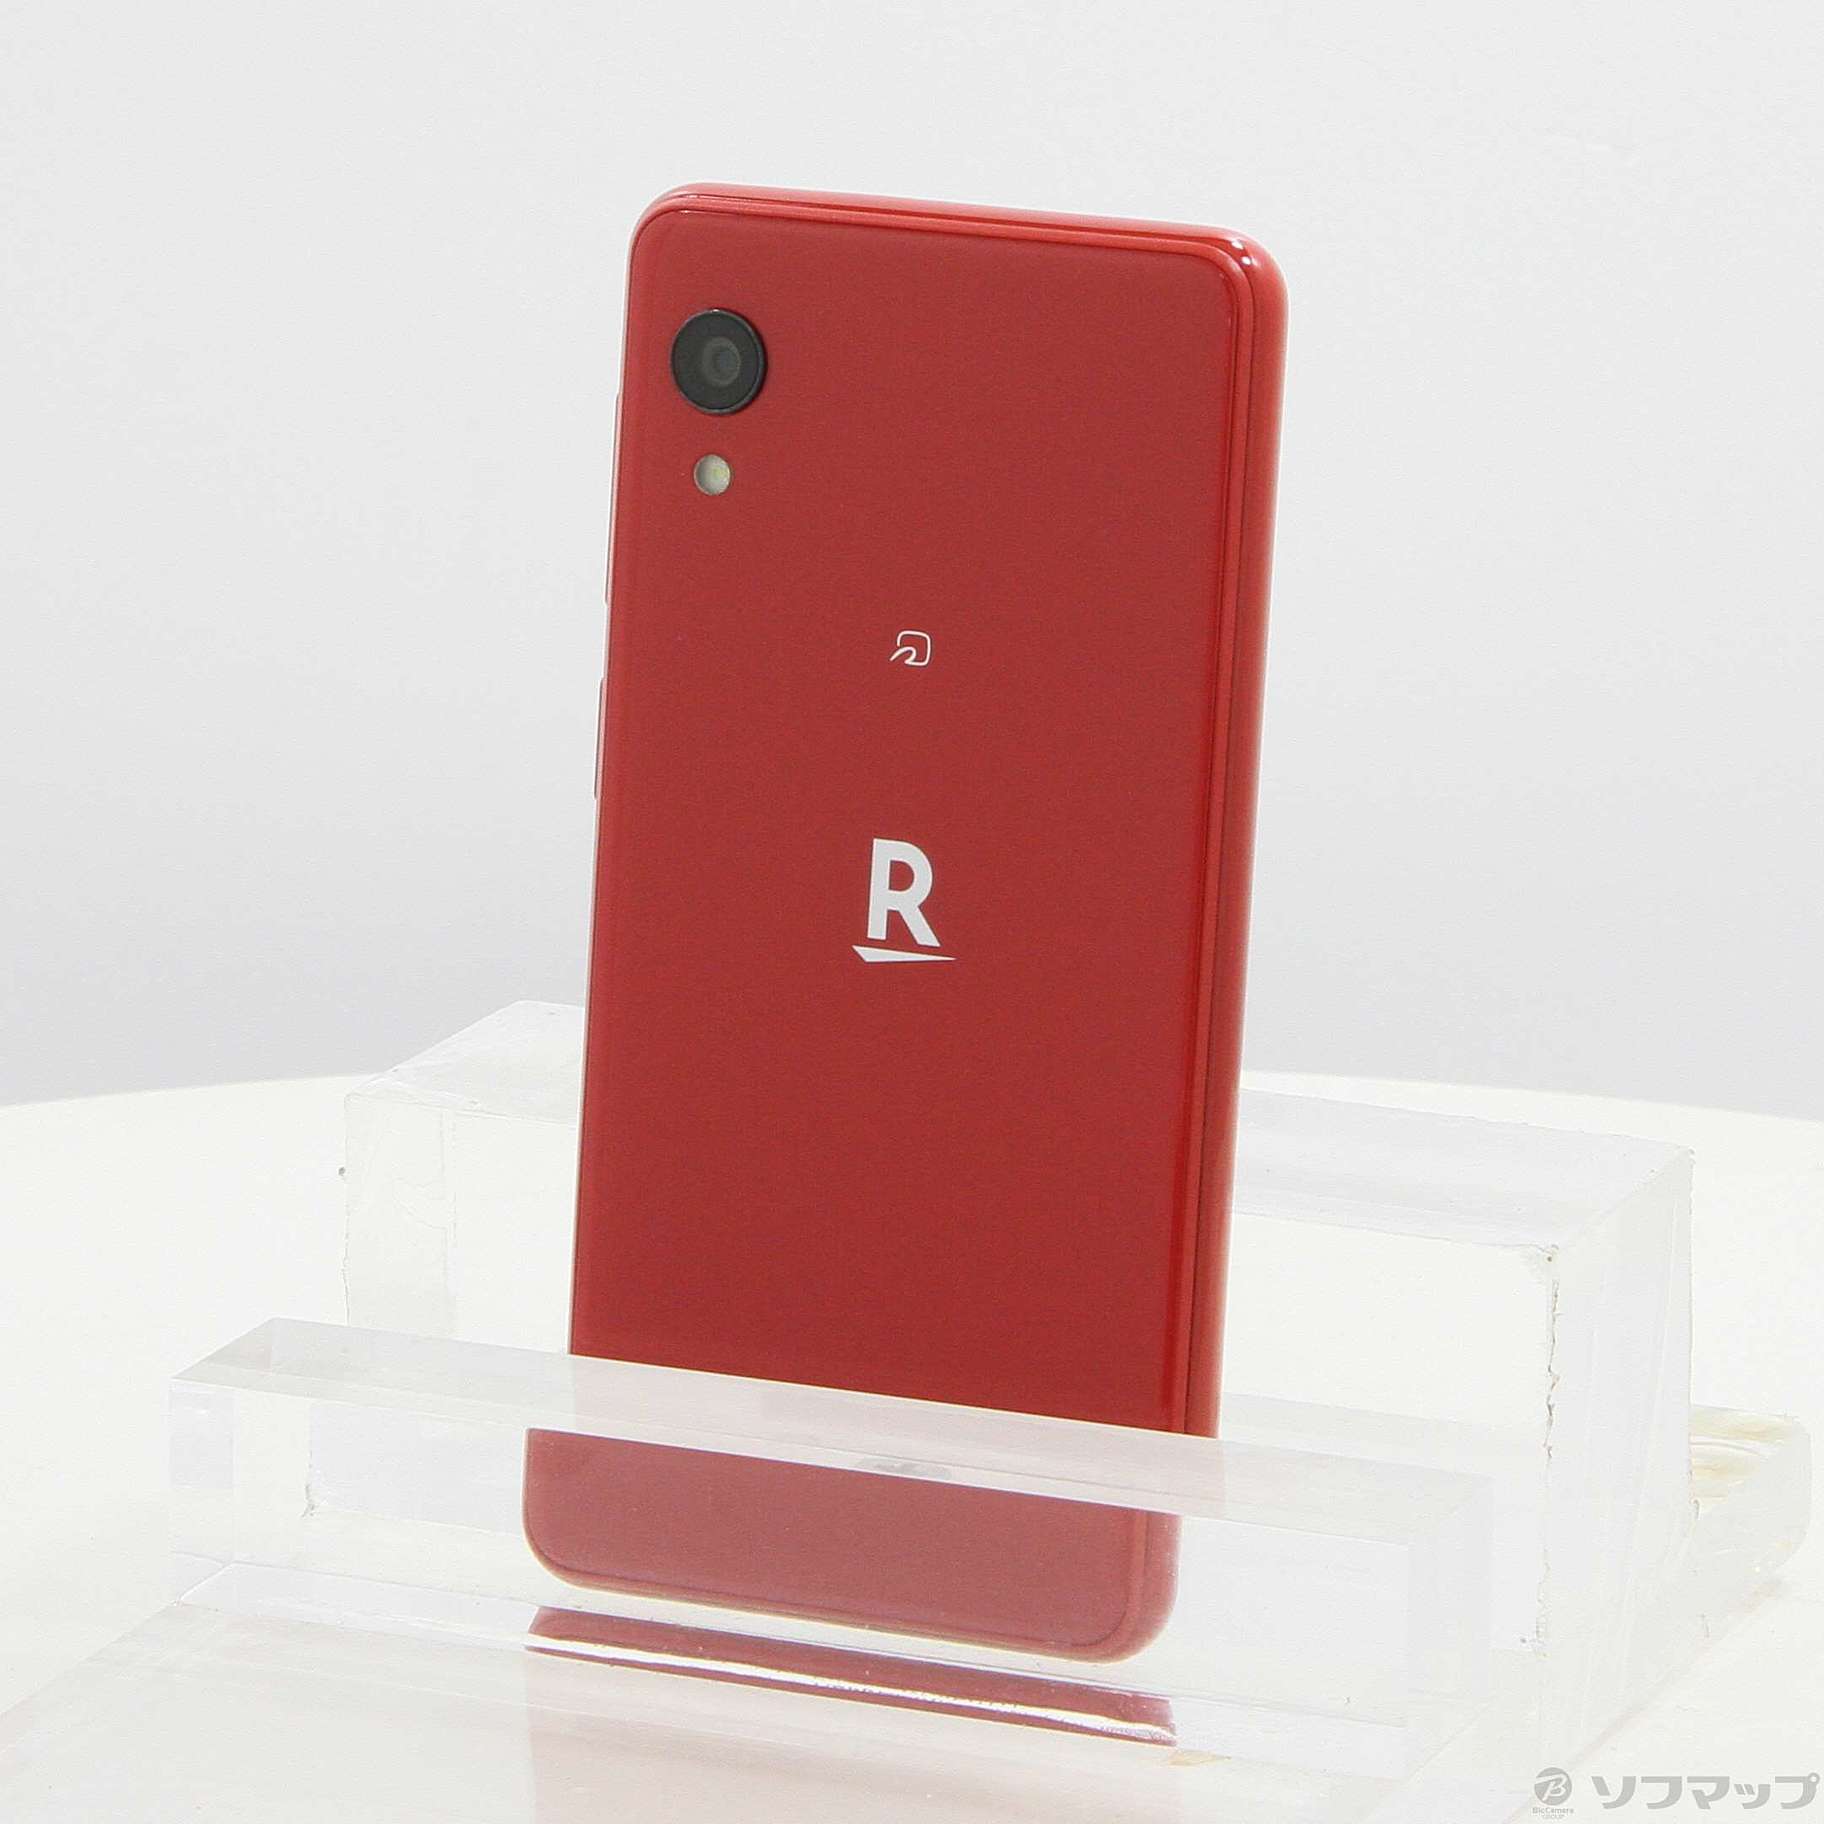 Rakuten Mini クリムゾンレッド 32 GB SIMフリー - 携帯電話